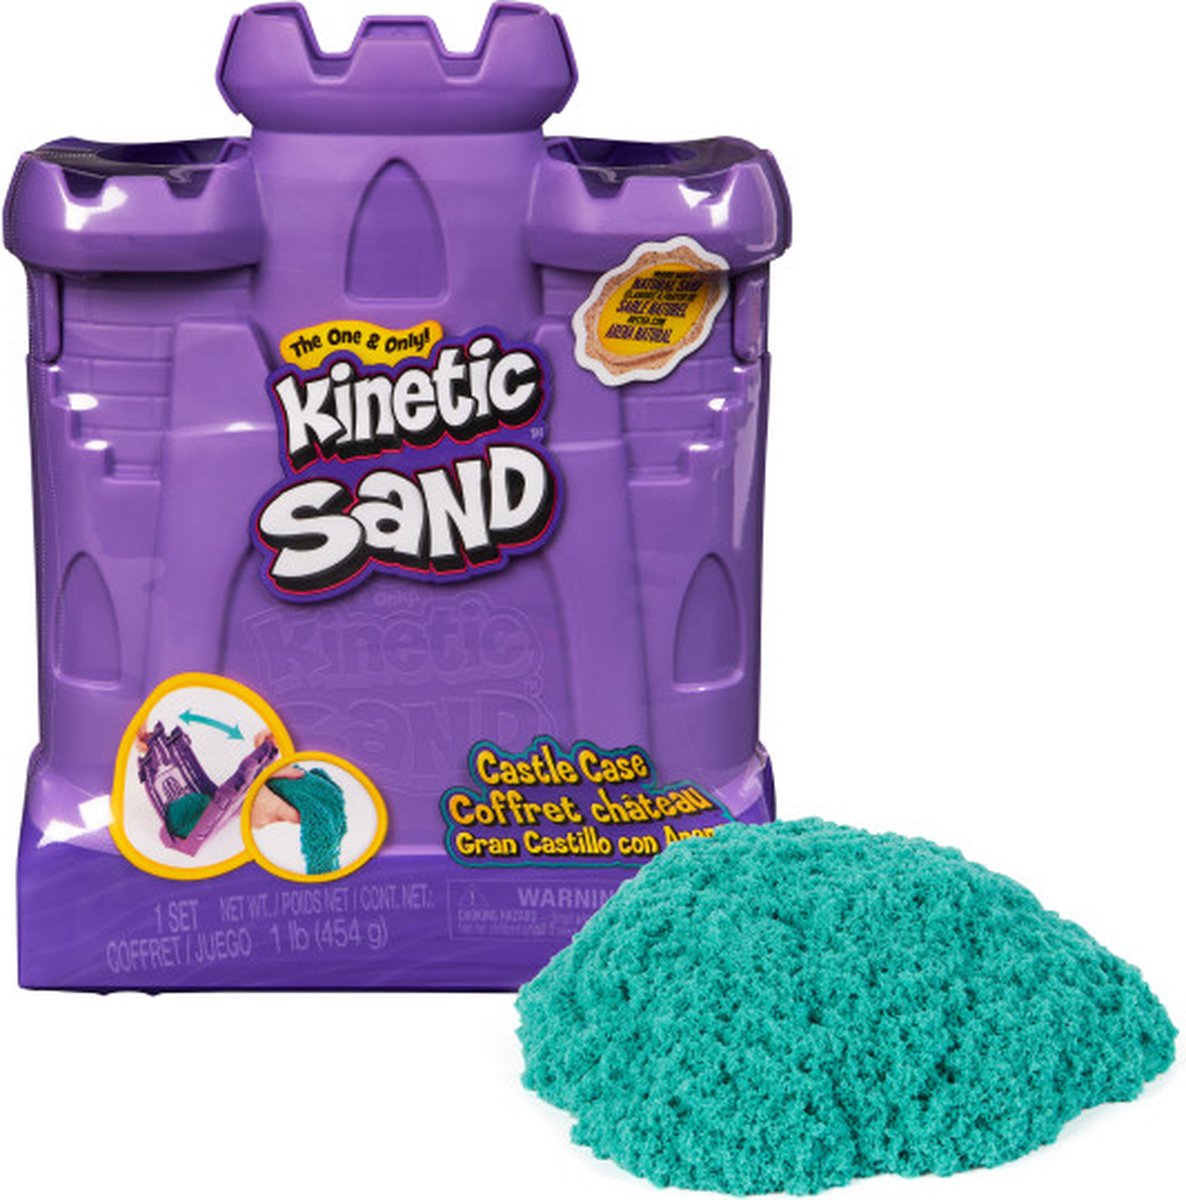 Kinetic Sand - Zandkasteel Speelkoffertje met 453 g blauwgroen speelzand - multifunctioneel speelvak en opbergbak - Sensorisch speelgoed